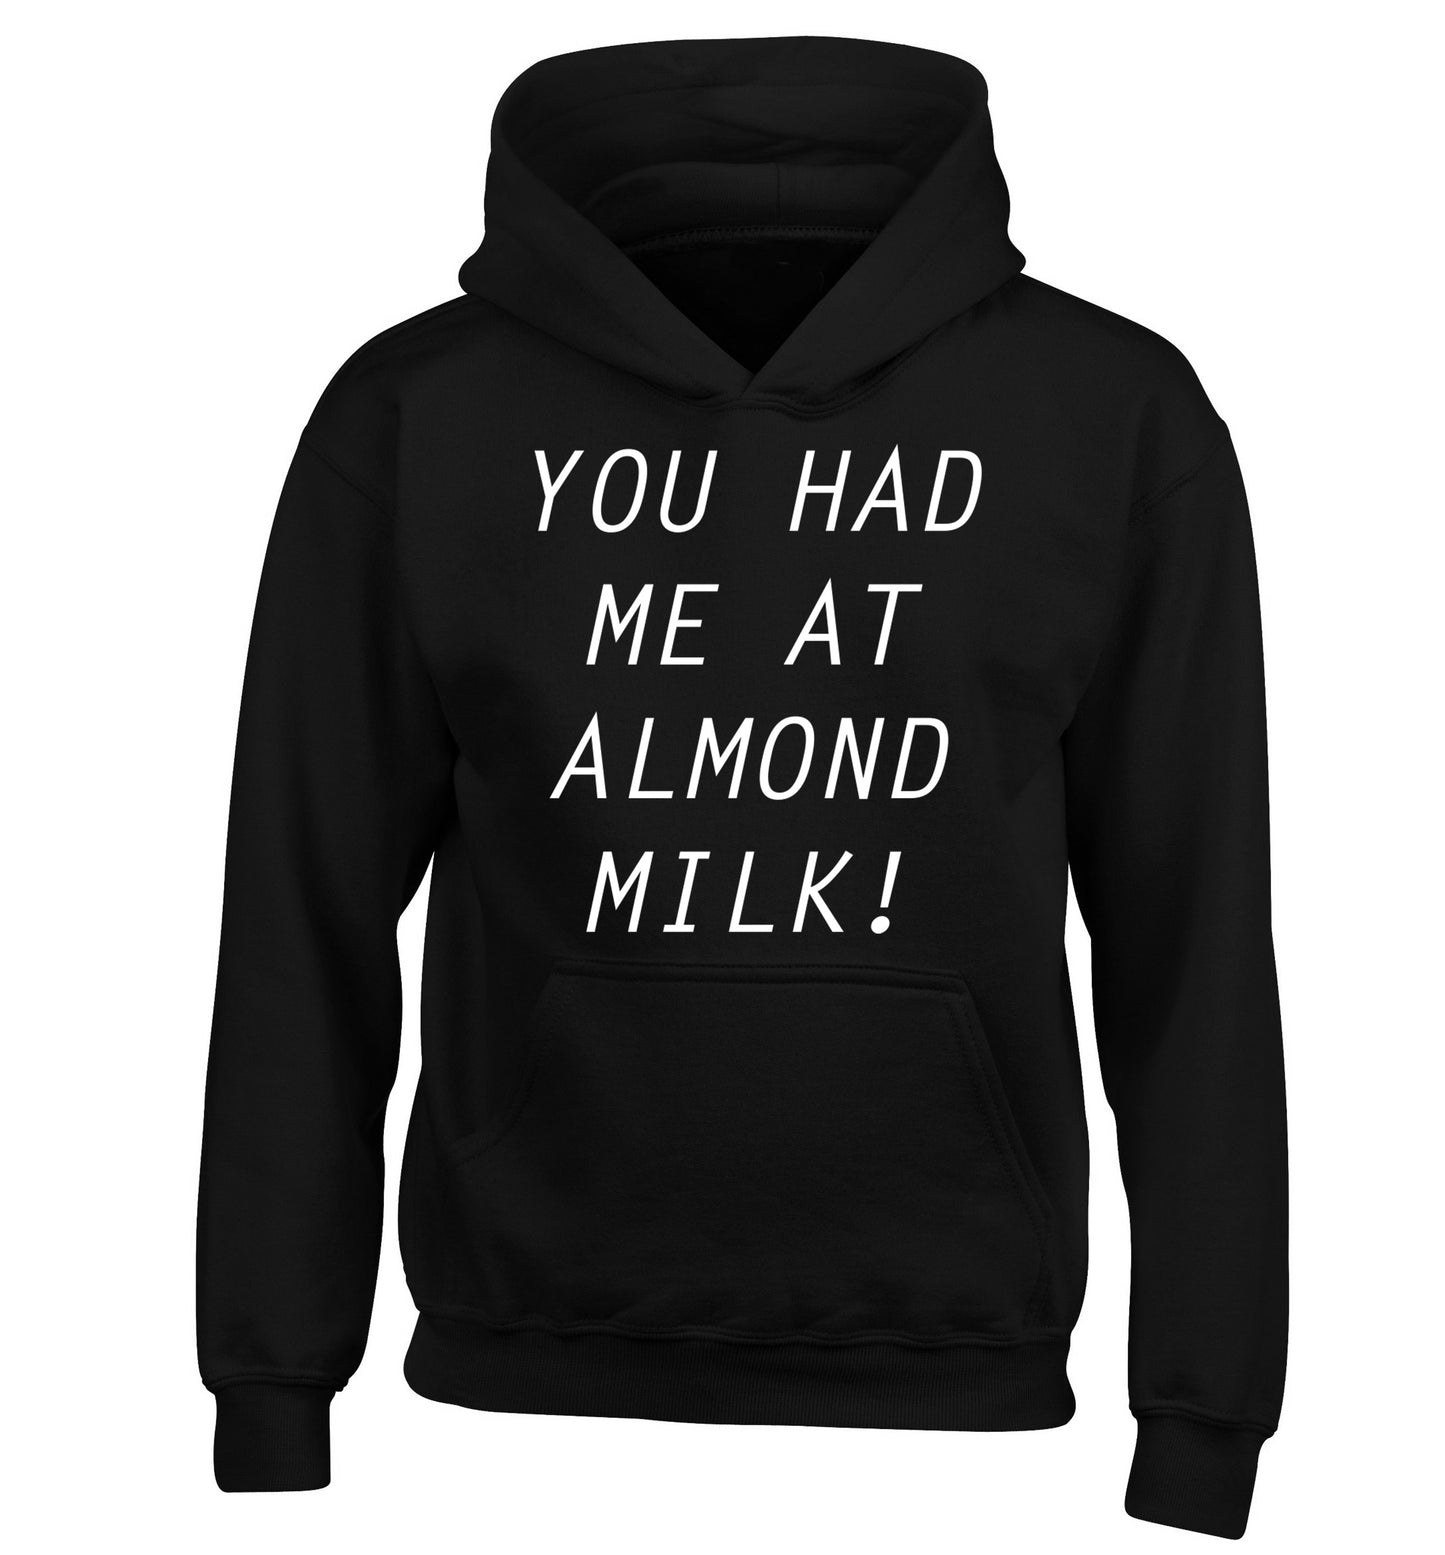 You had me at almond milk children's black hoodie 12-14 Years